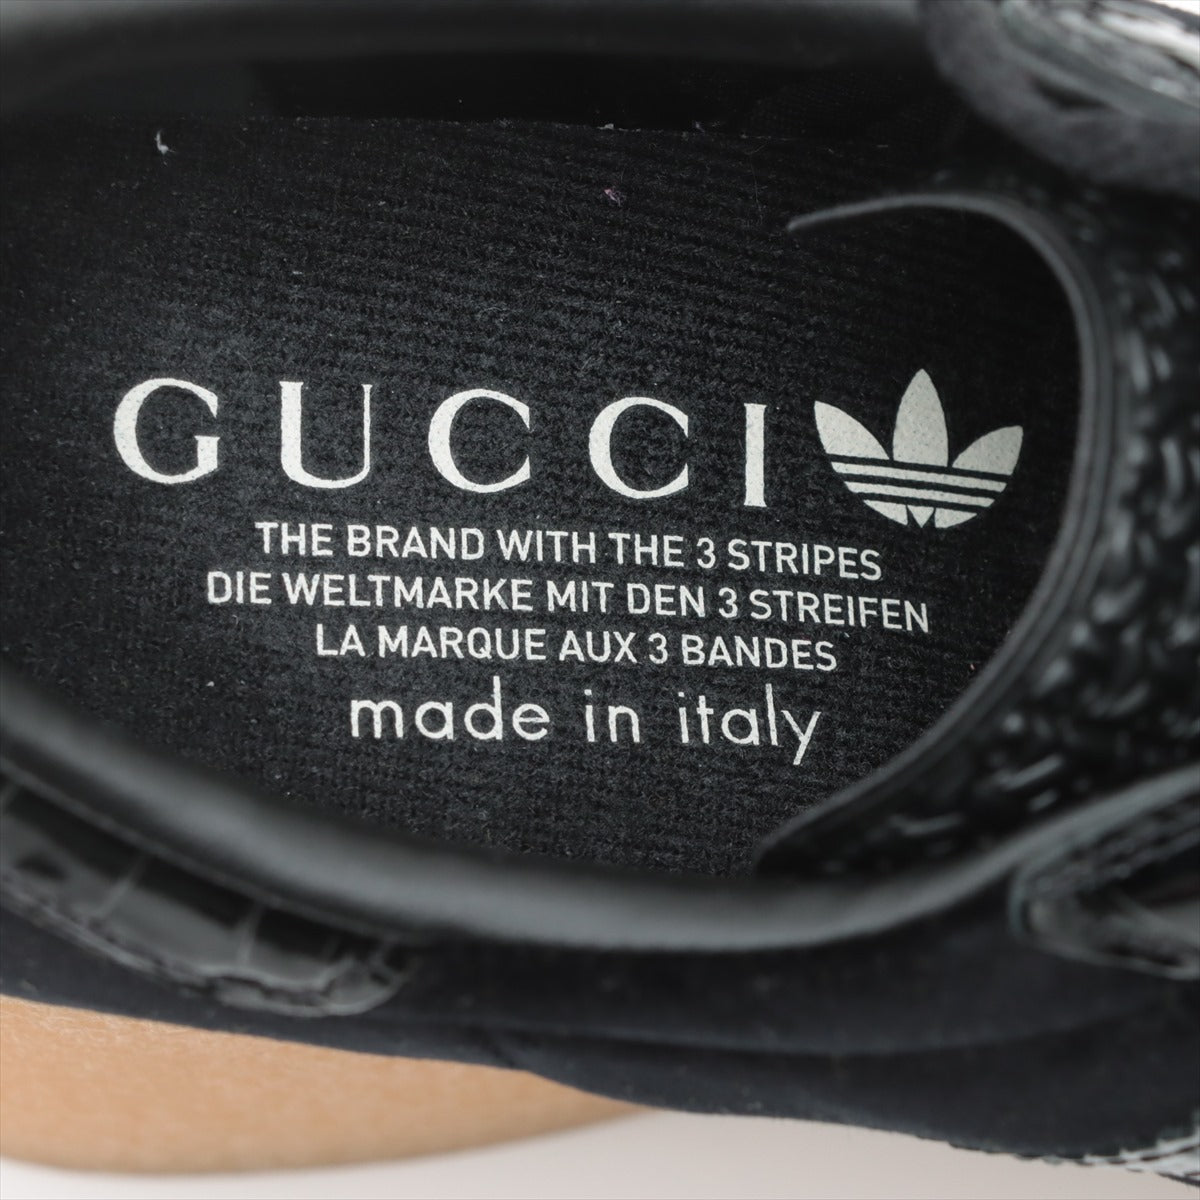 Gucci x Adidas Gazelle Belbet x Leather Trainers 36  Black 725627 Crocodile WadiSol Thick Bottom Change Cable Box  Bag